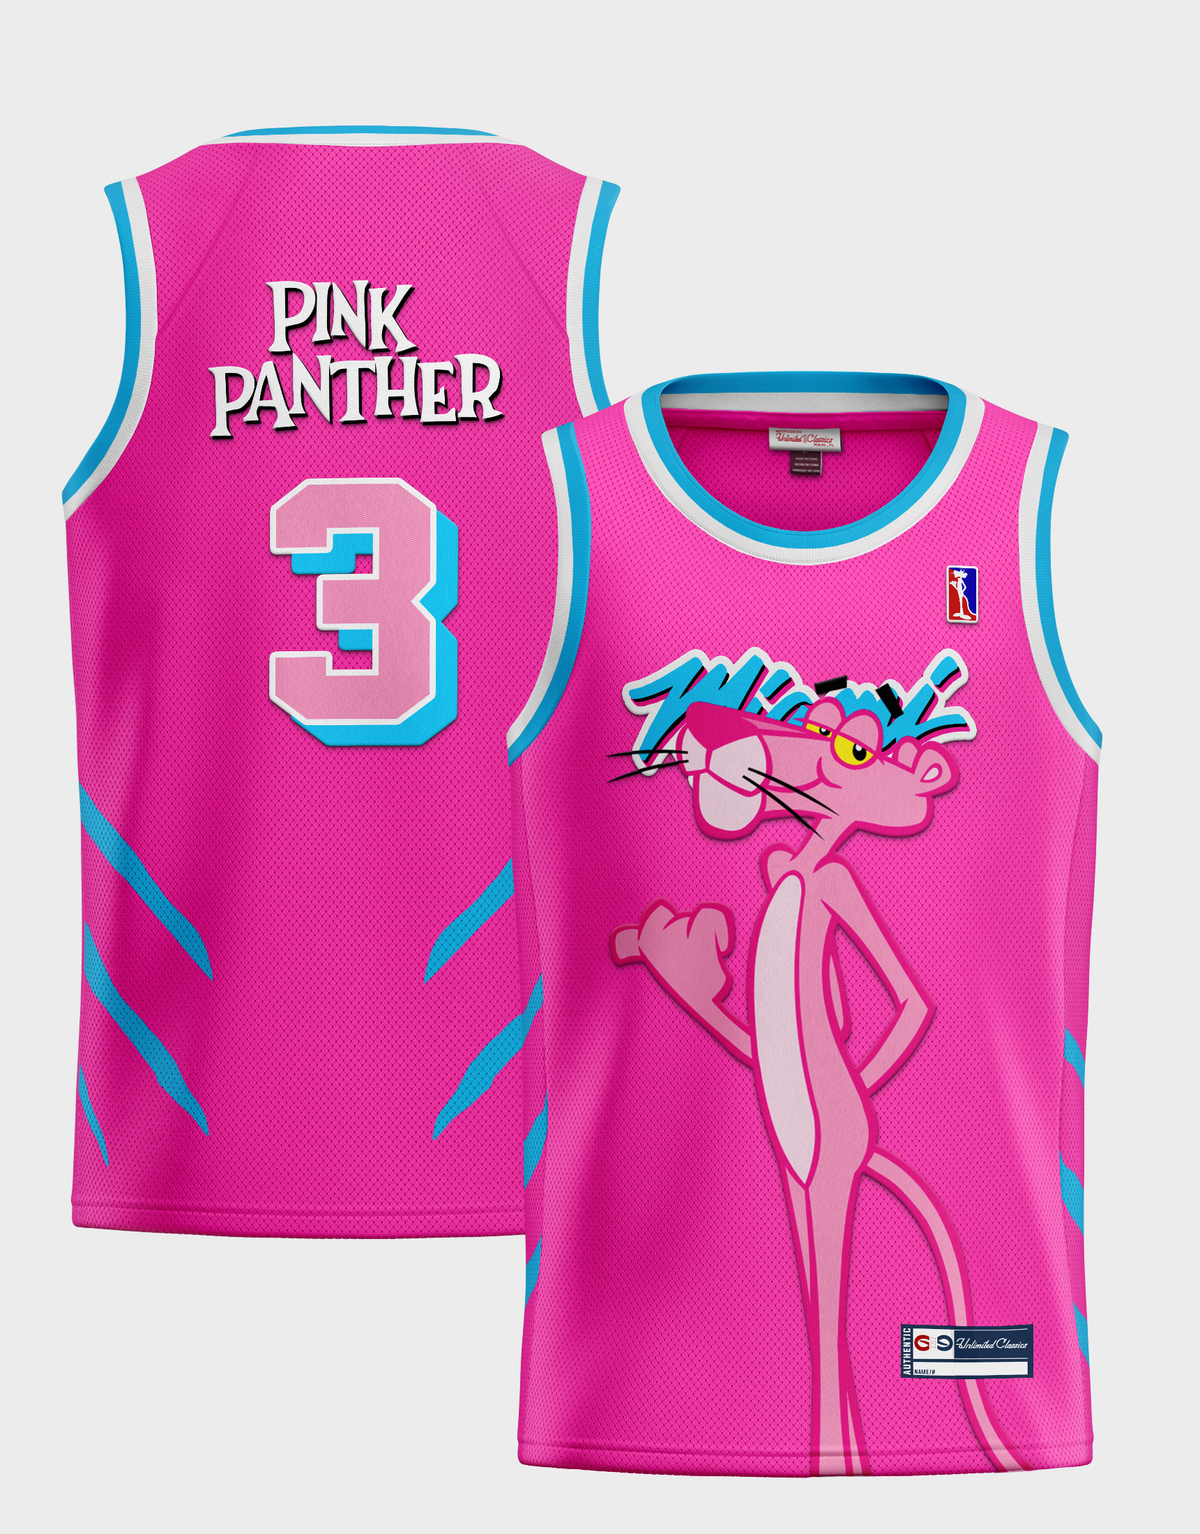 Camiseta de baloncesto juvenil Miami X Pink Panther #3